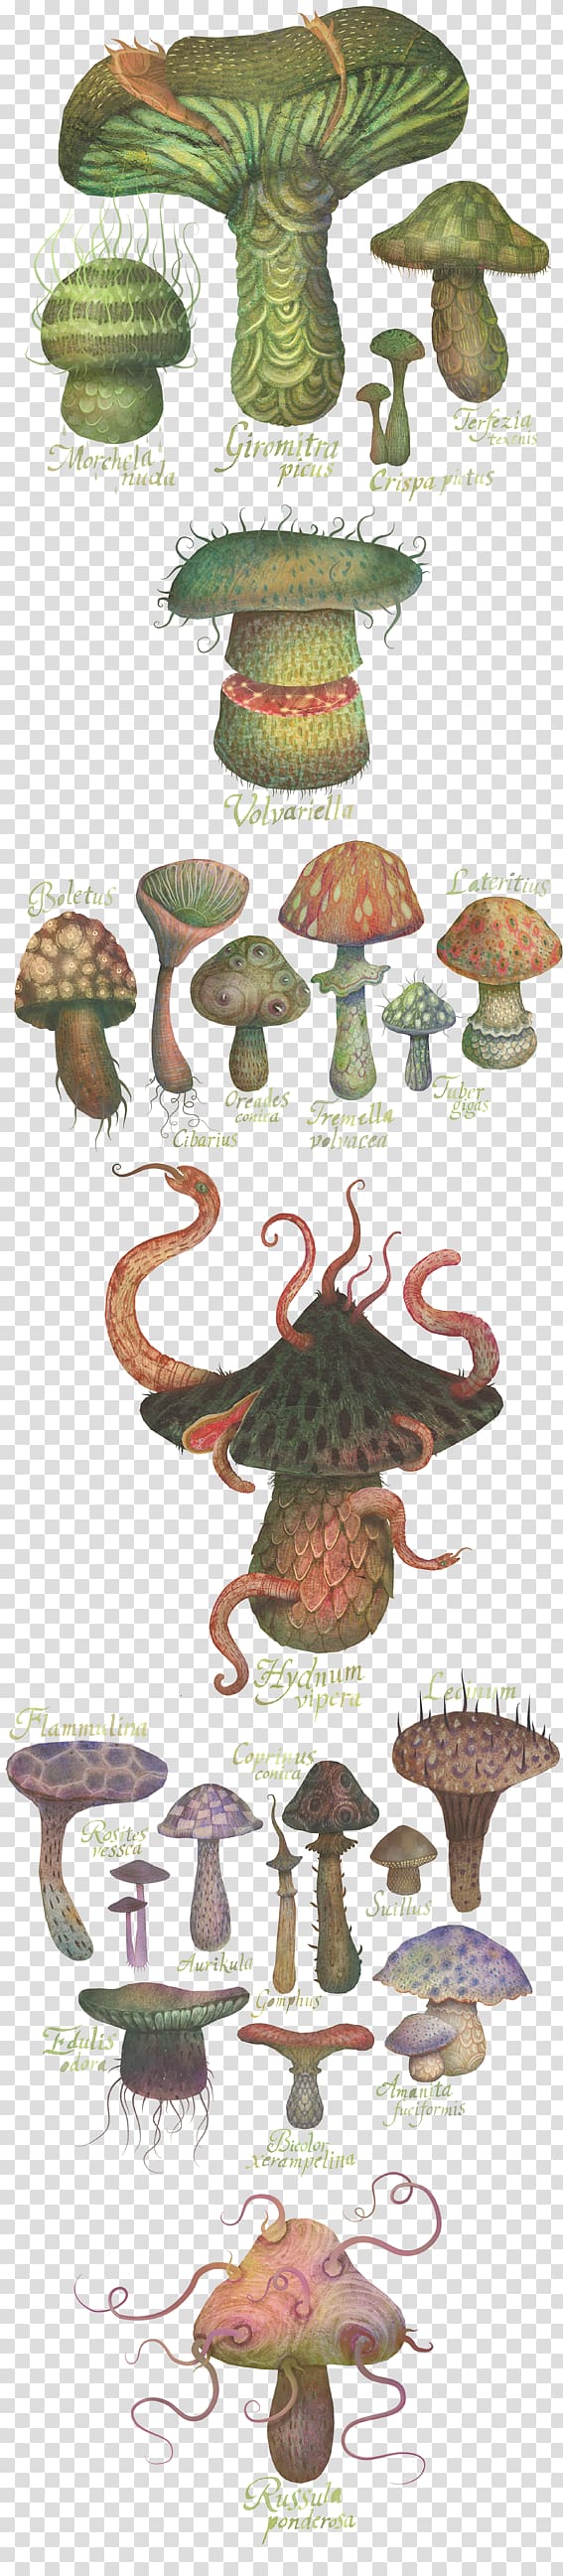 The Fungus Kingdom Mushroom Illustration Drawing, mushroom transparent background PNG clipart